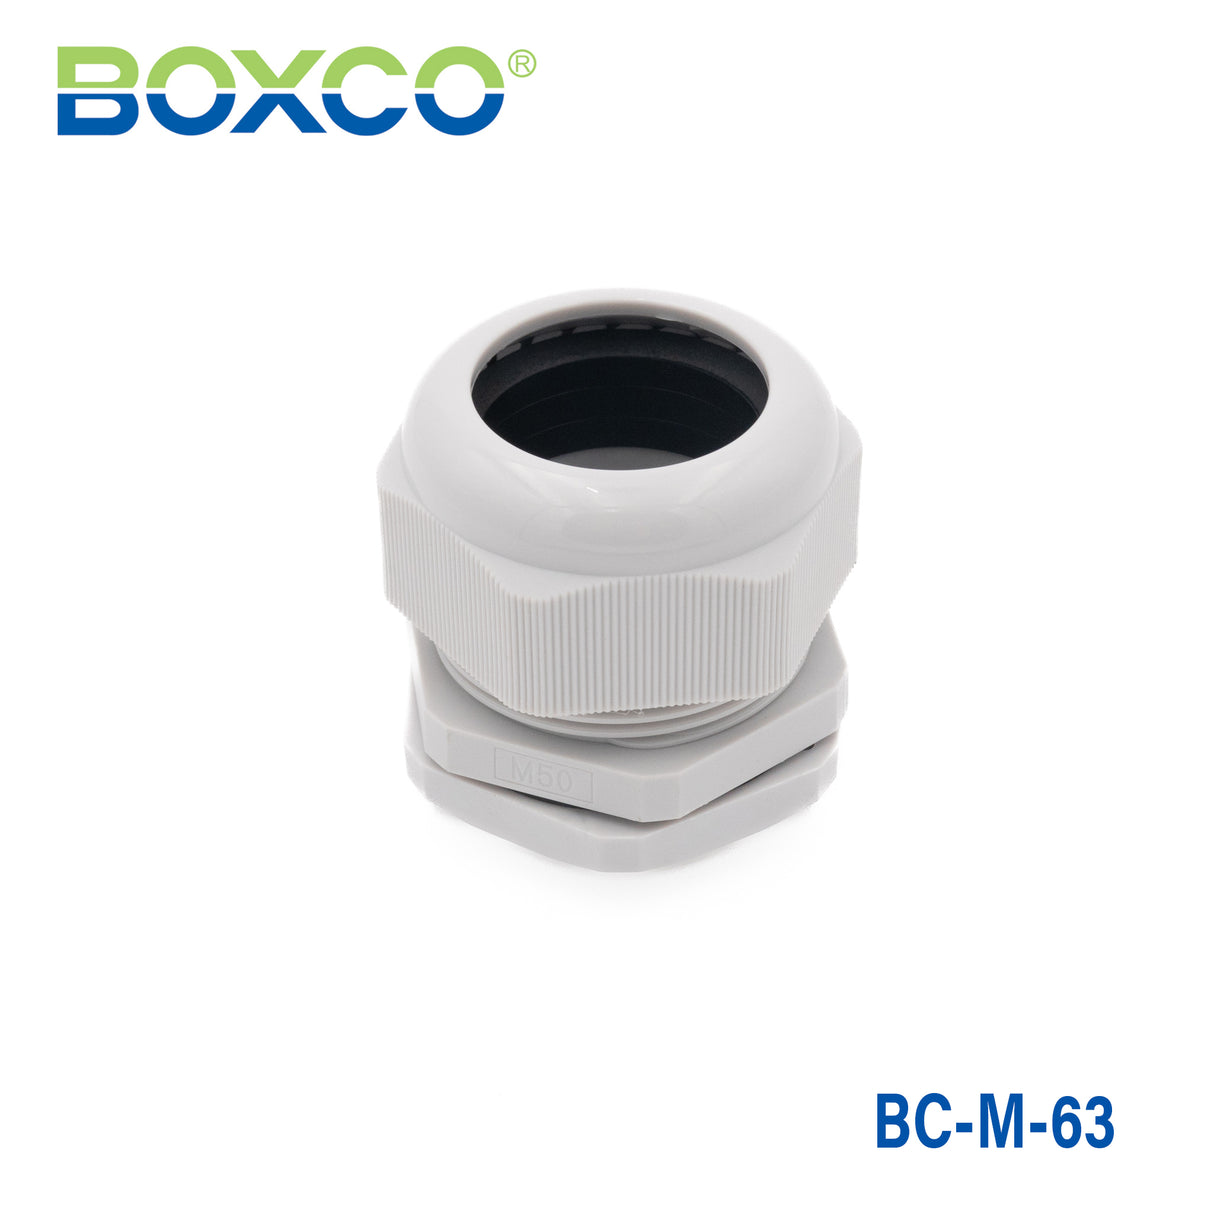 Boxco Plastic Cable Gland 37~44mm Cable Range BC-M-63